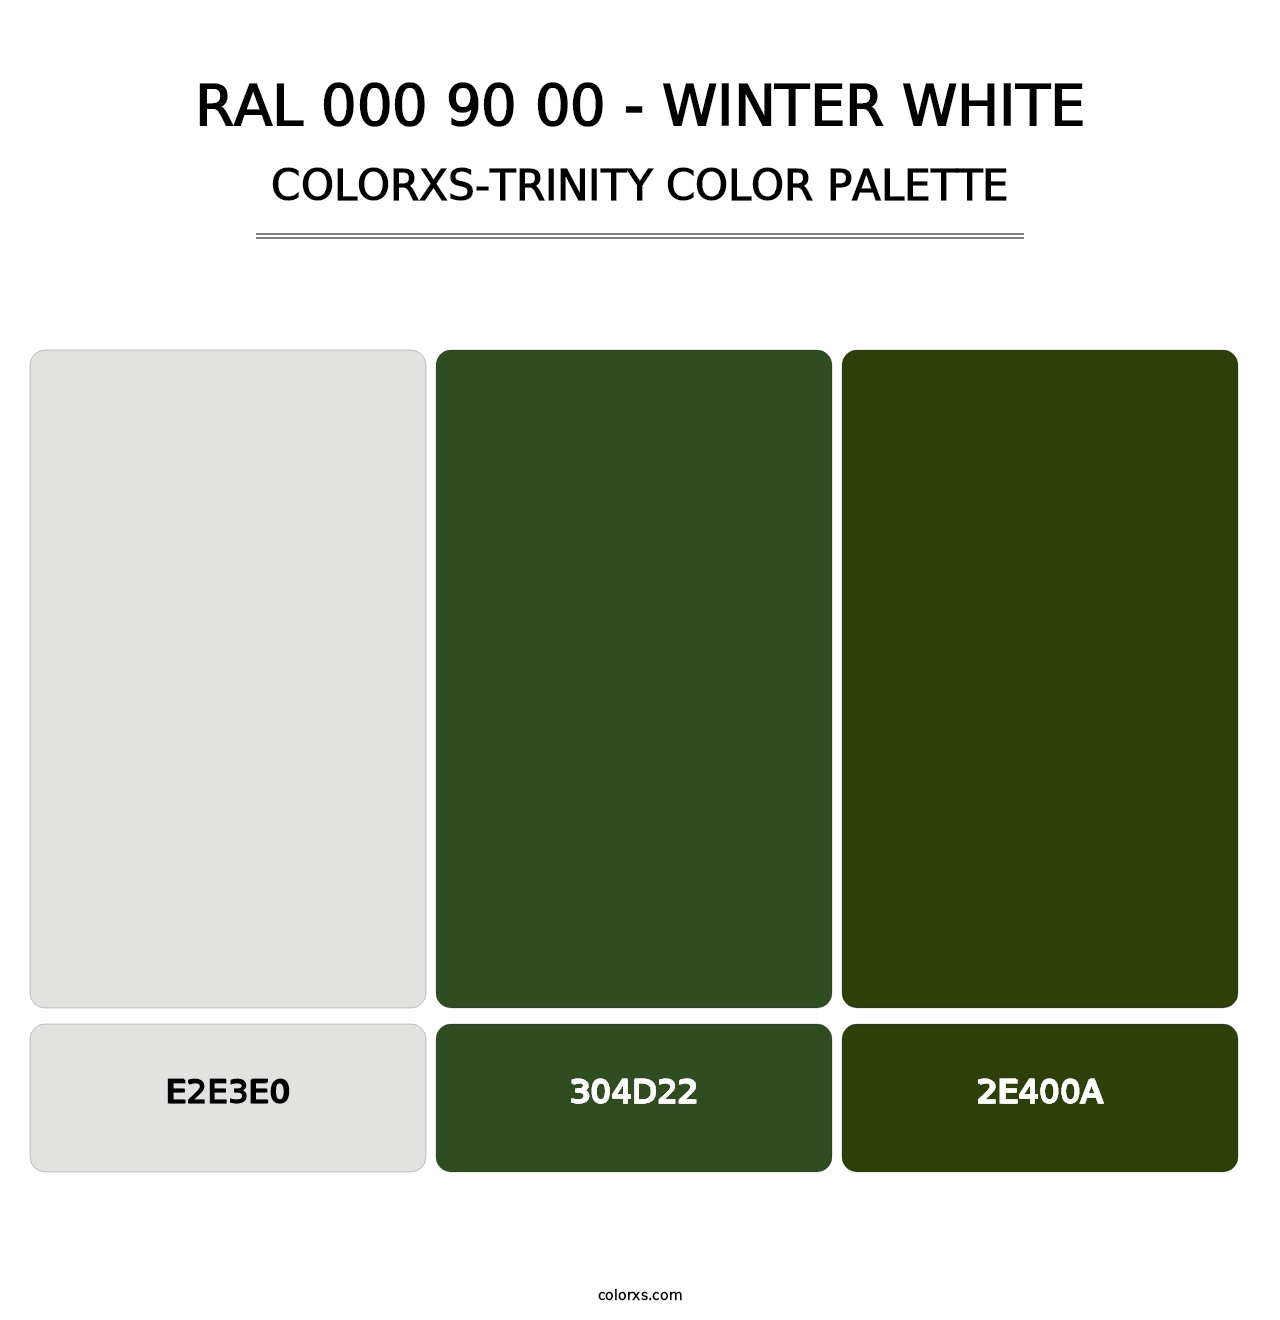 RAL 000 90 00 - Winter White - Colorxs Trinity Palette